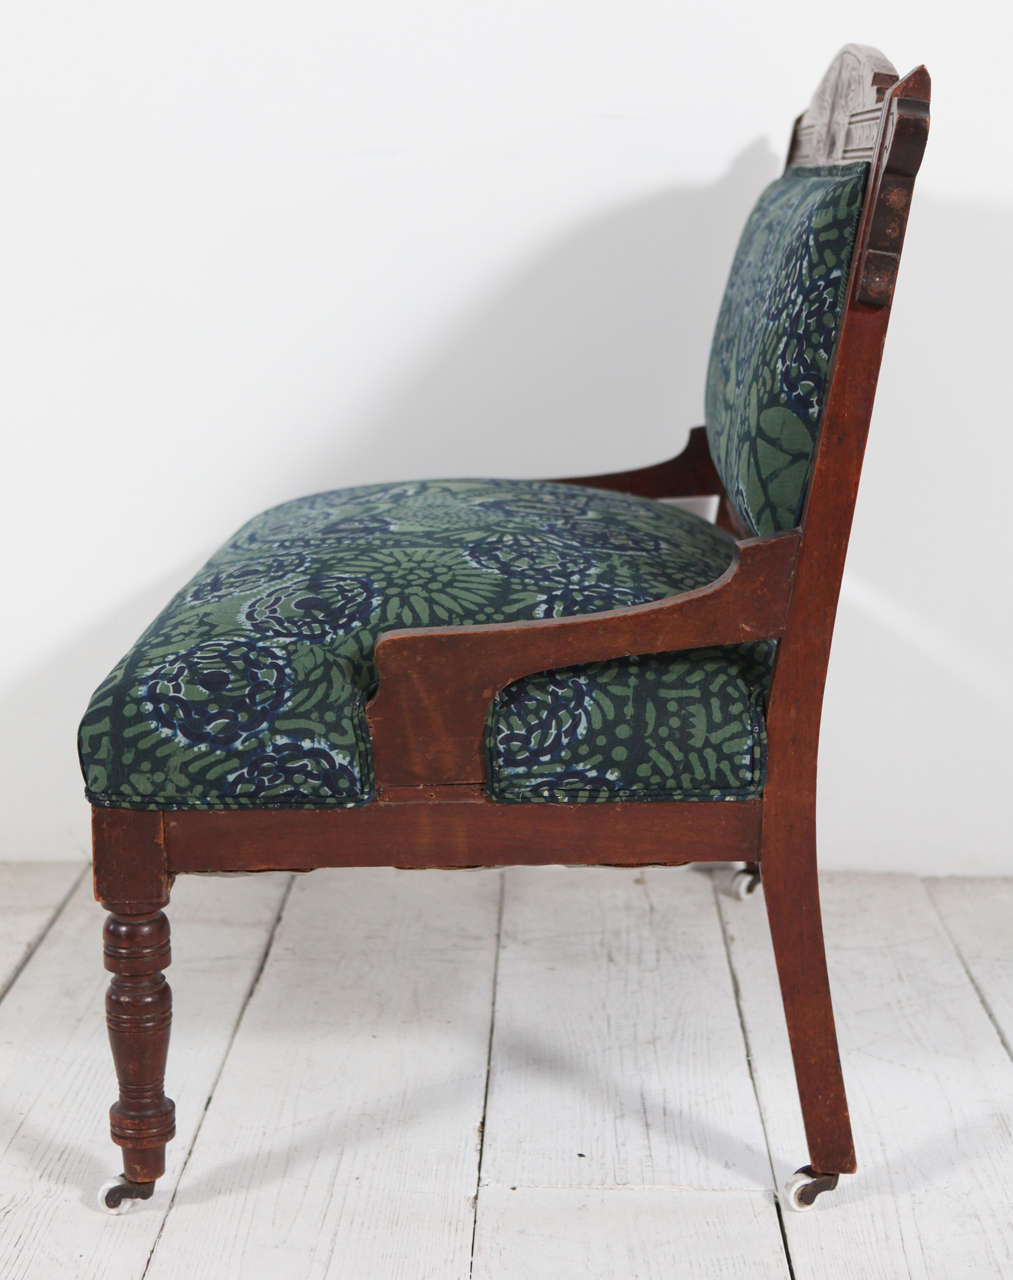 American Vintage Eastlake Style Settee Upholstered in African Fabric